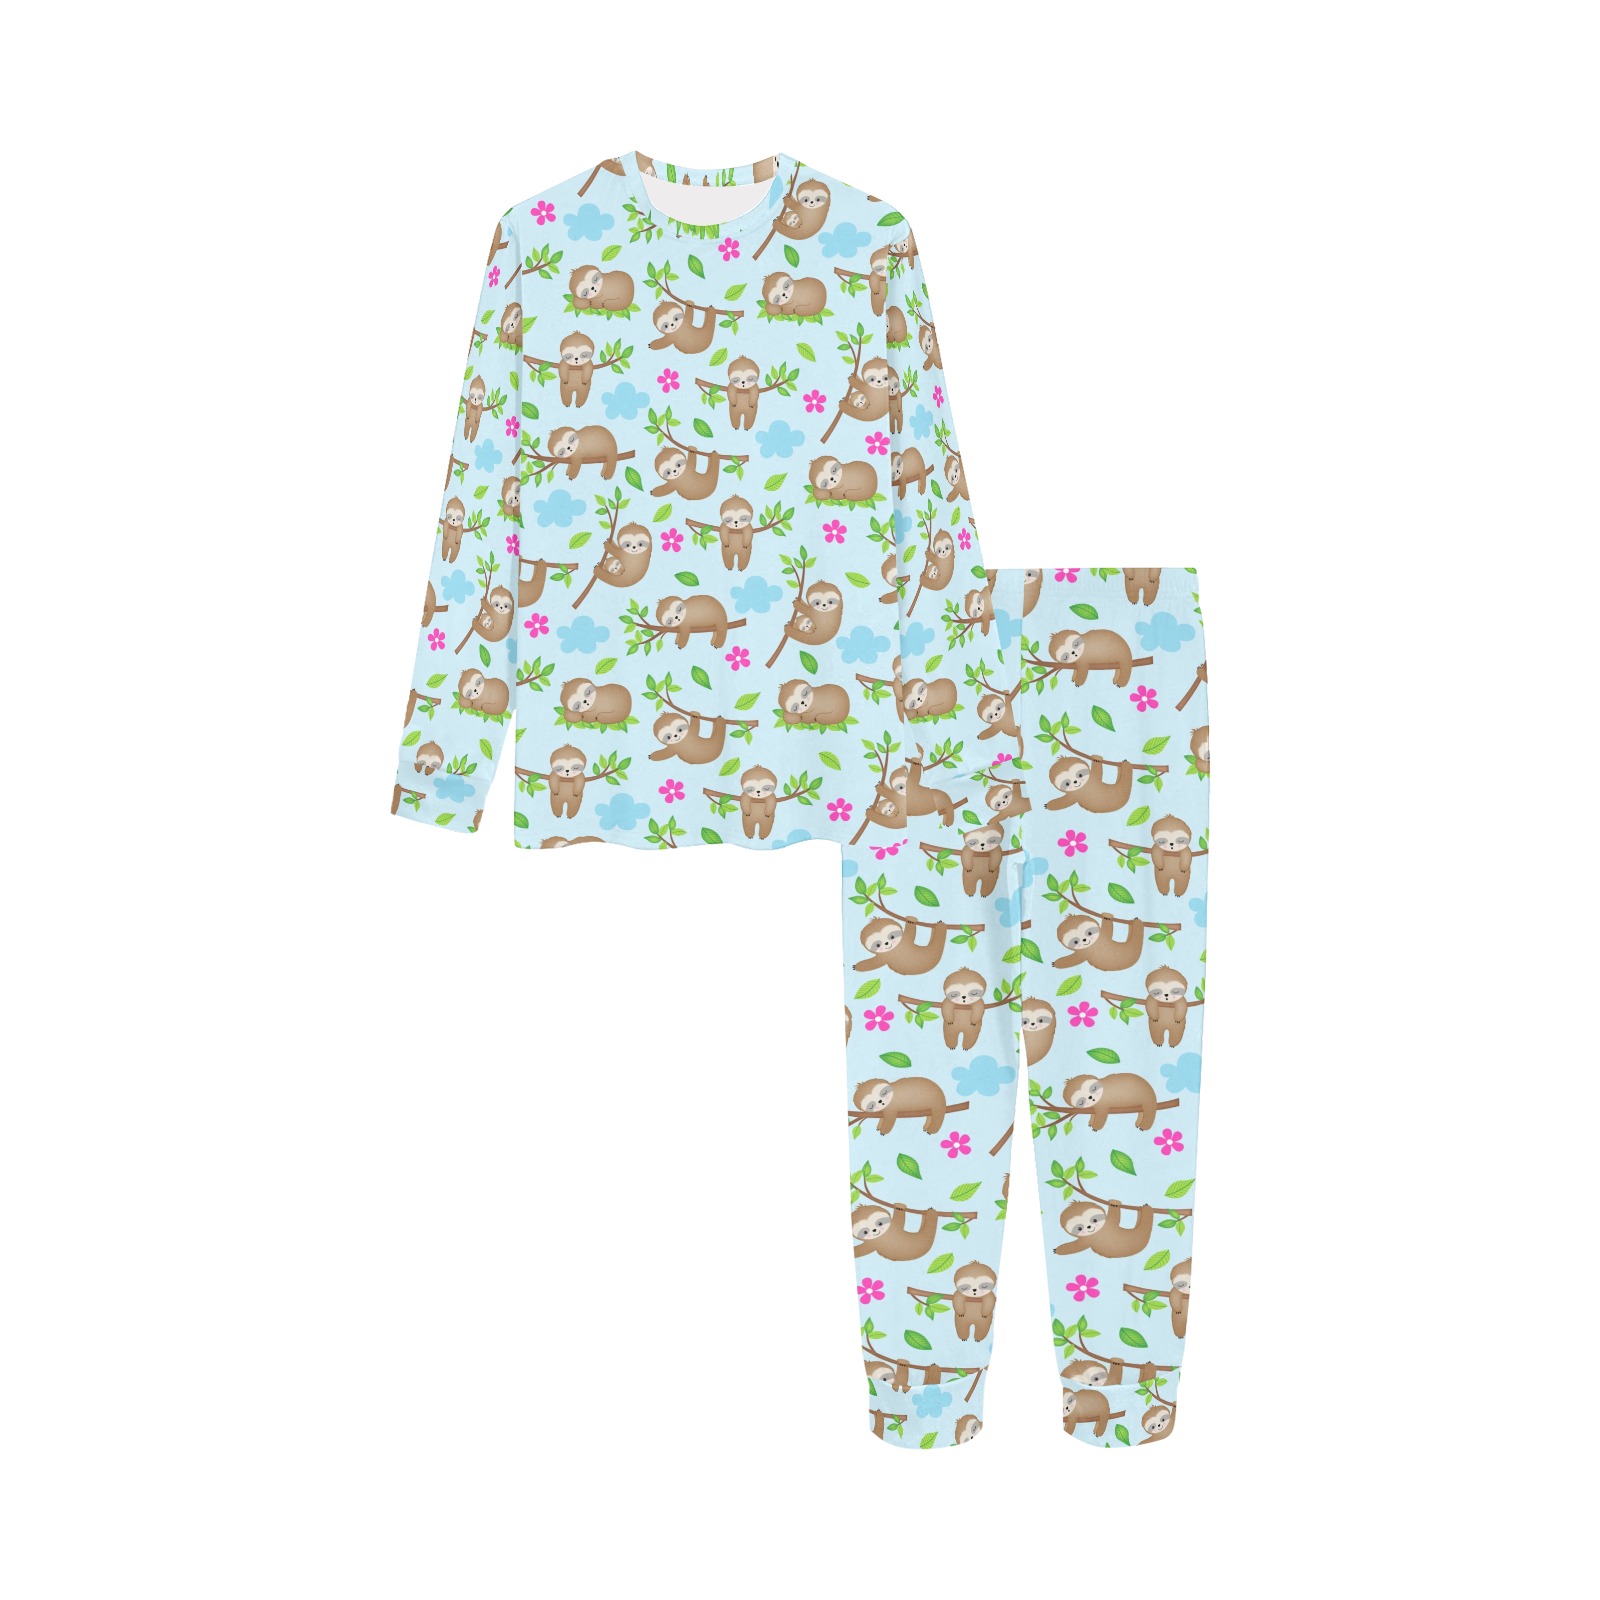 Lovely sweet sloth Kids' All Over Print Pajama Set